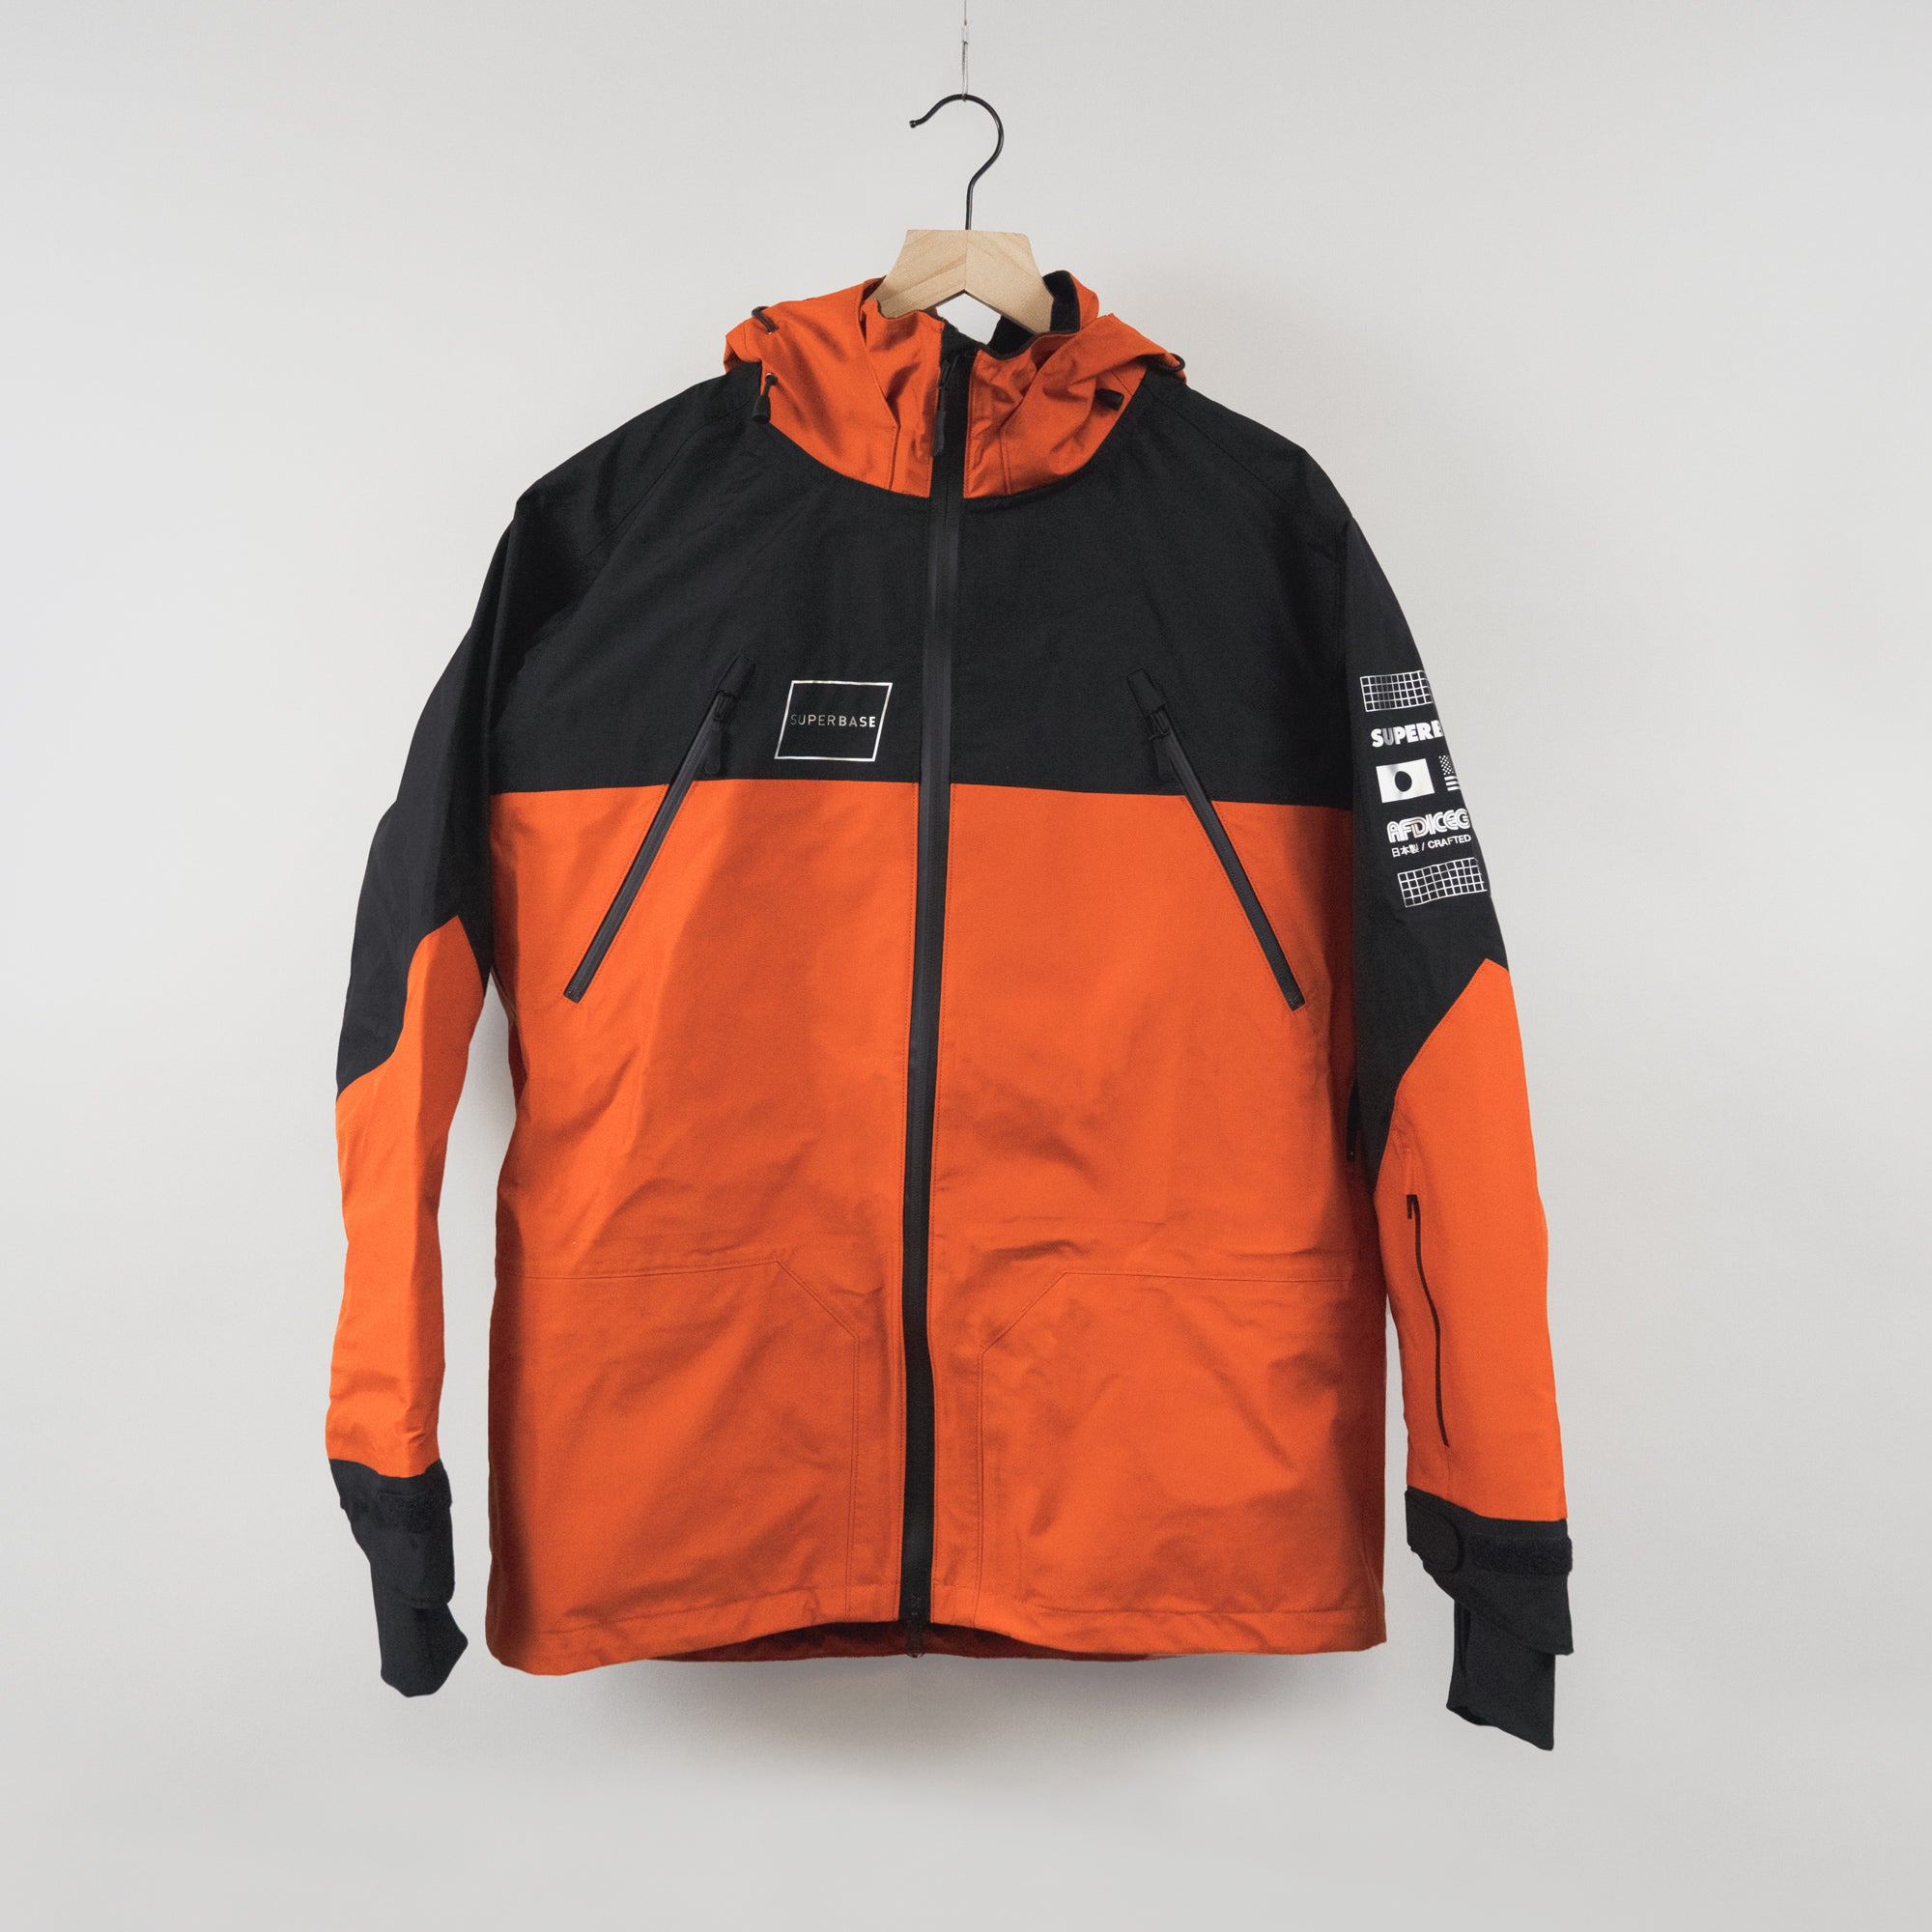 Superbase x AFDICEGEAR JAPAN Jacket (Orange/Black)